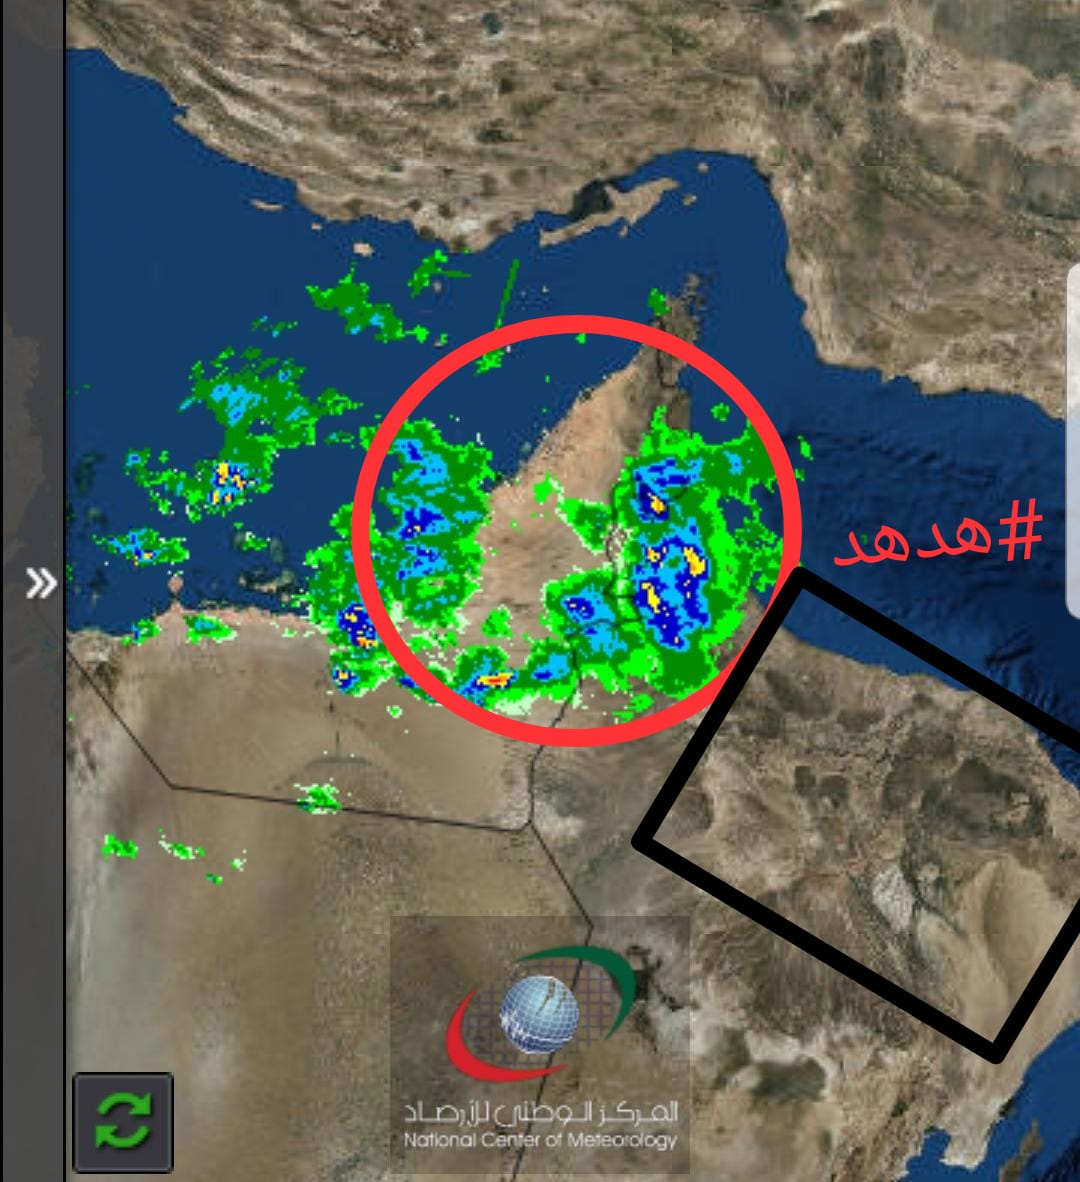 Northern Oman witnesses sporadic rainfall